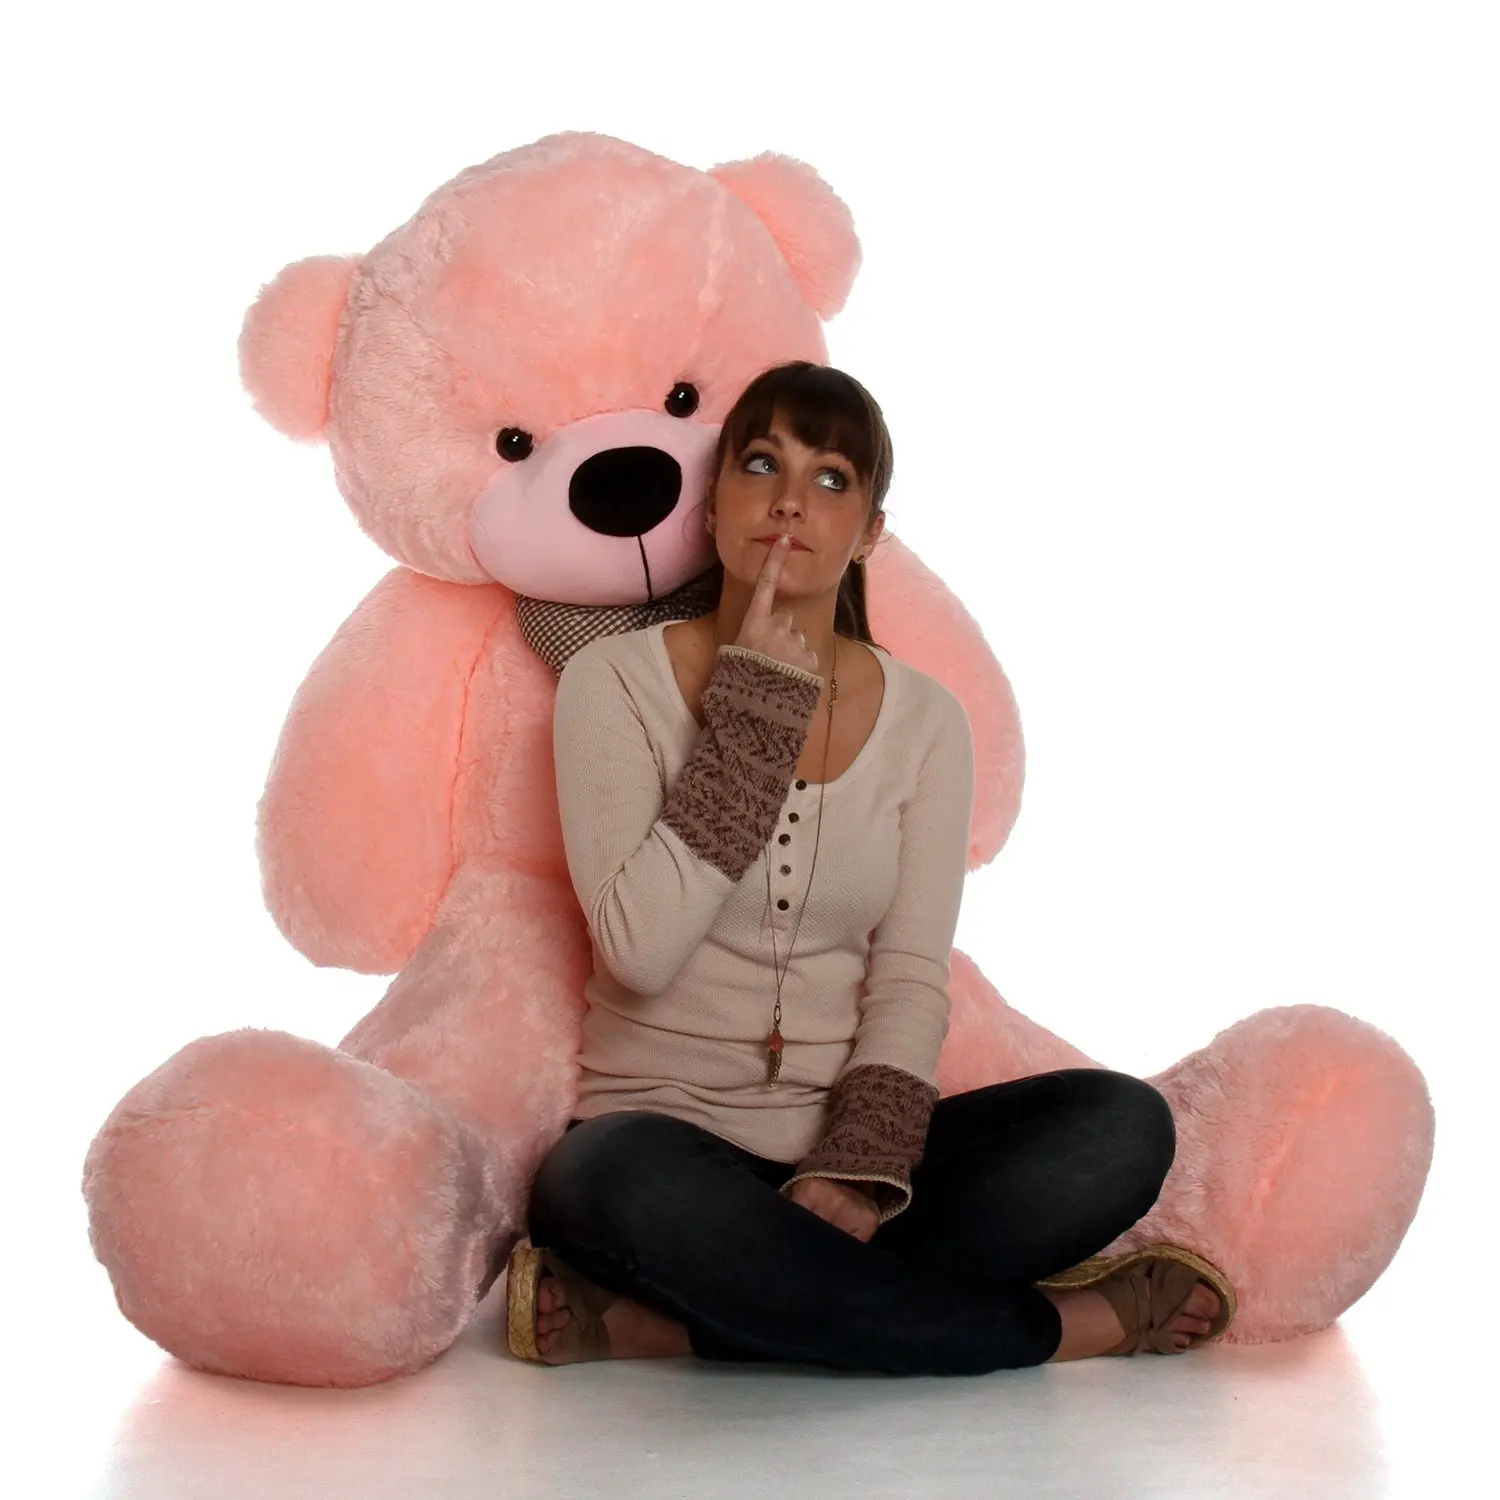 teddy bear 5 ft price